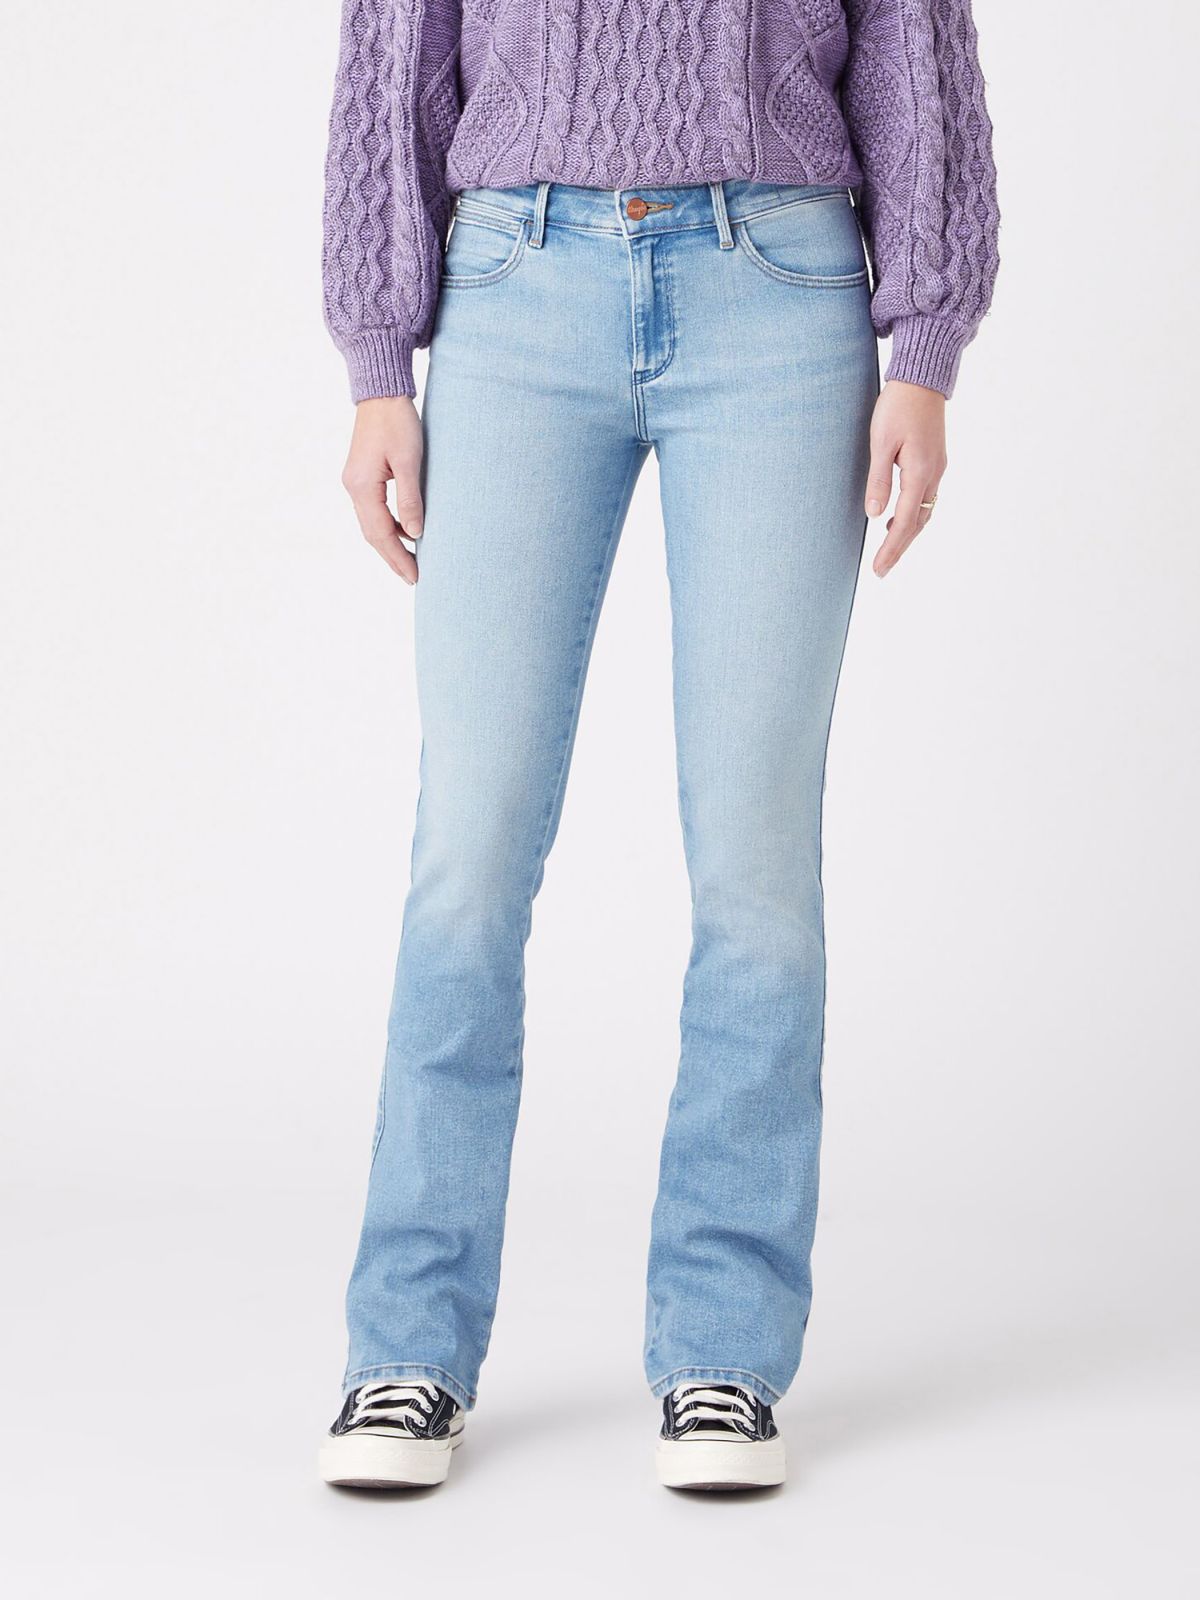  מכנסי ג'ינס Bootcut של WRANGLER